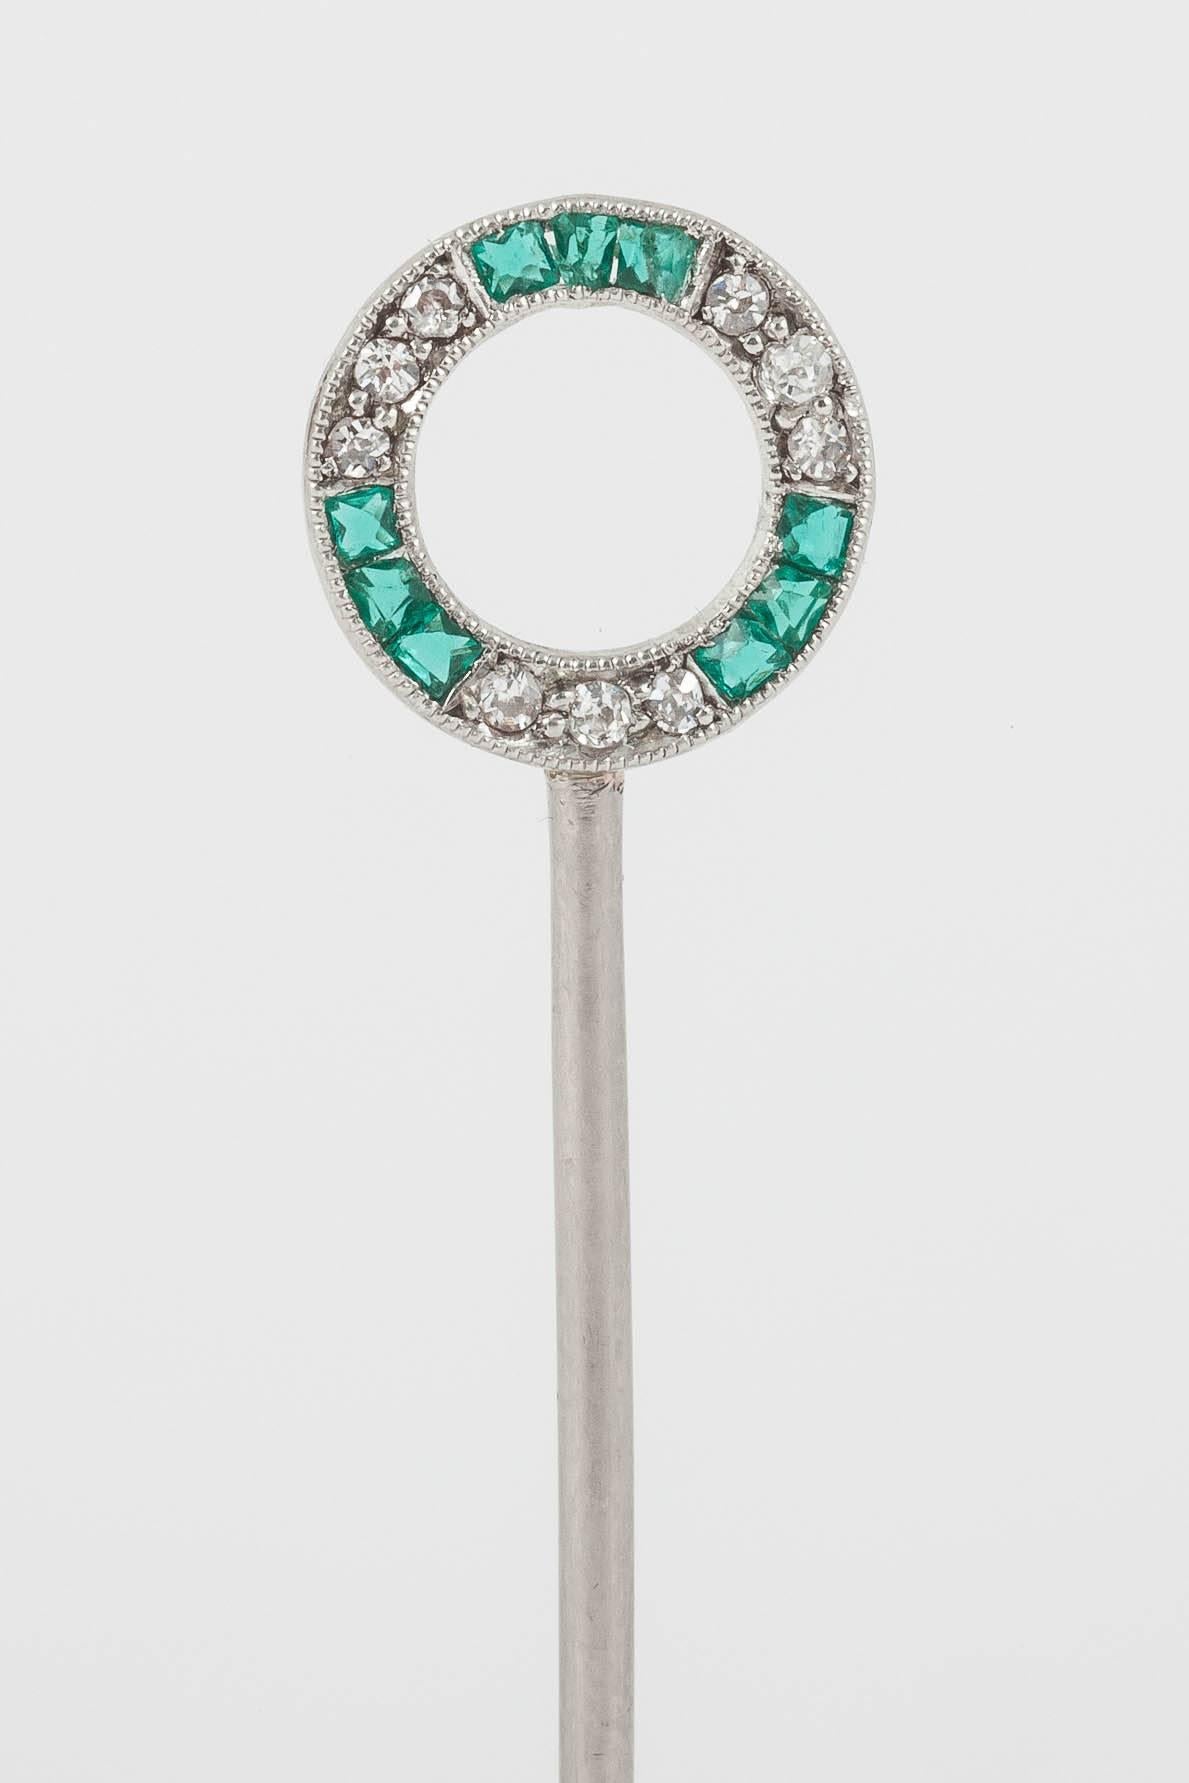 A platinum mounted winning post tiepin set with brilliant cut diamonds and calibre set emeralds. English c, 1900-10